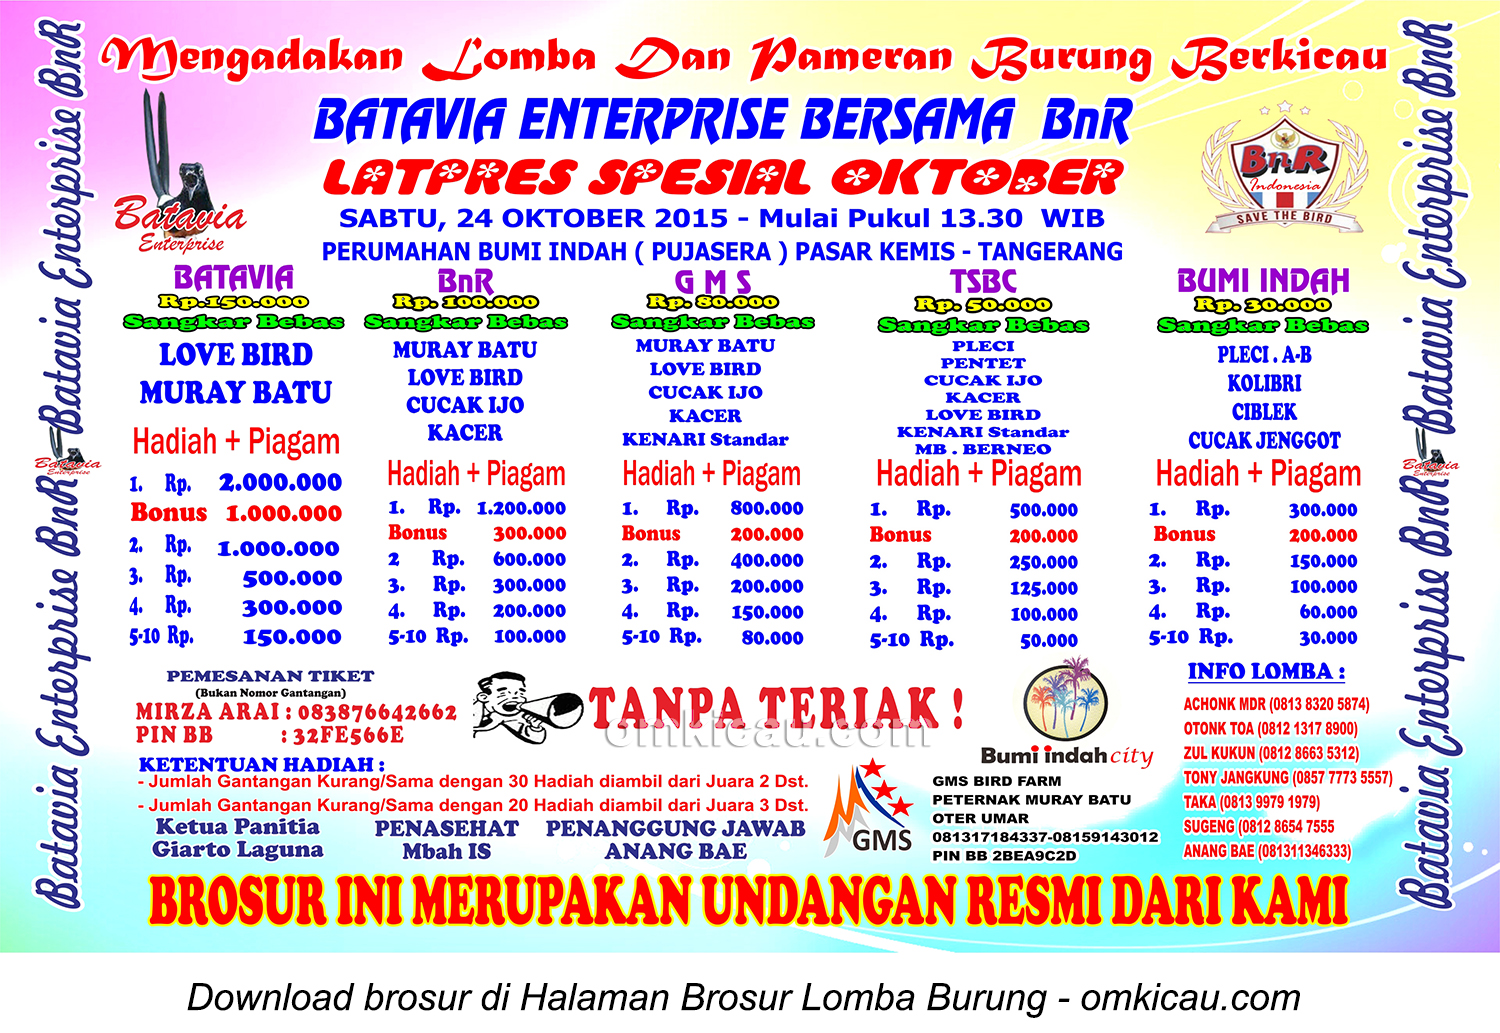 Brosur Latpres Spesial Oktober Batavia Enterprise Bersama BnR, Tangerang, 24 Oktober 2015